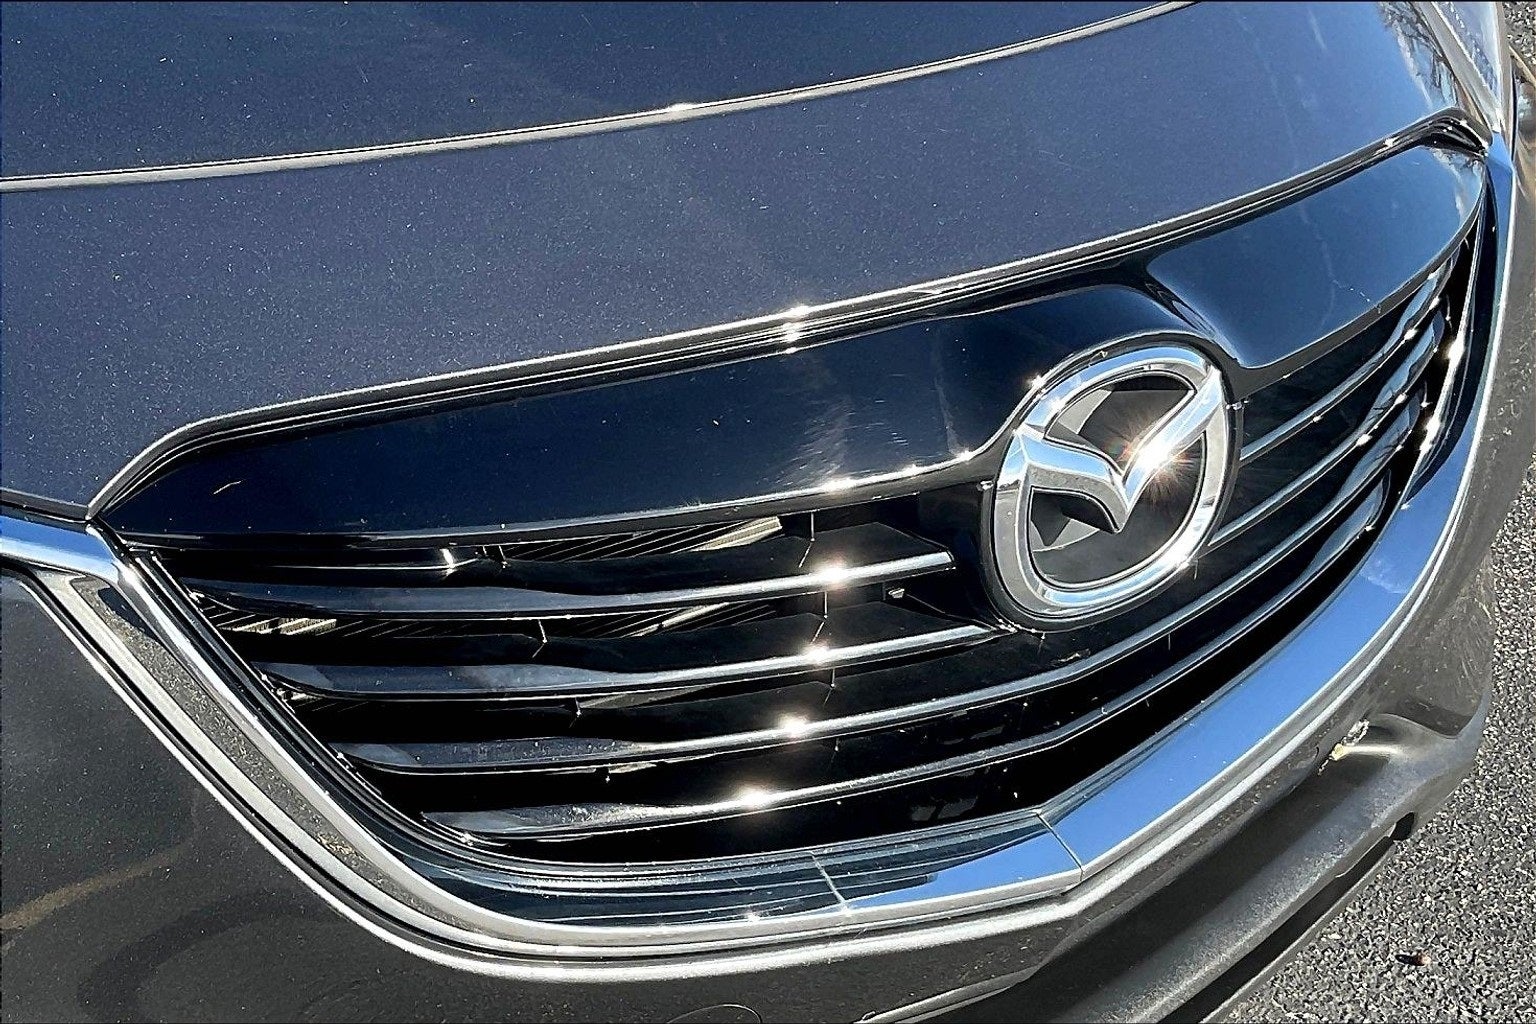 2015 Mazda Mazda CX-9 Grand Touring